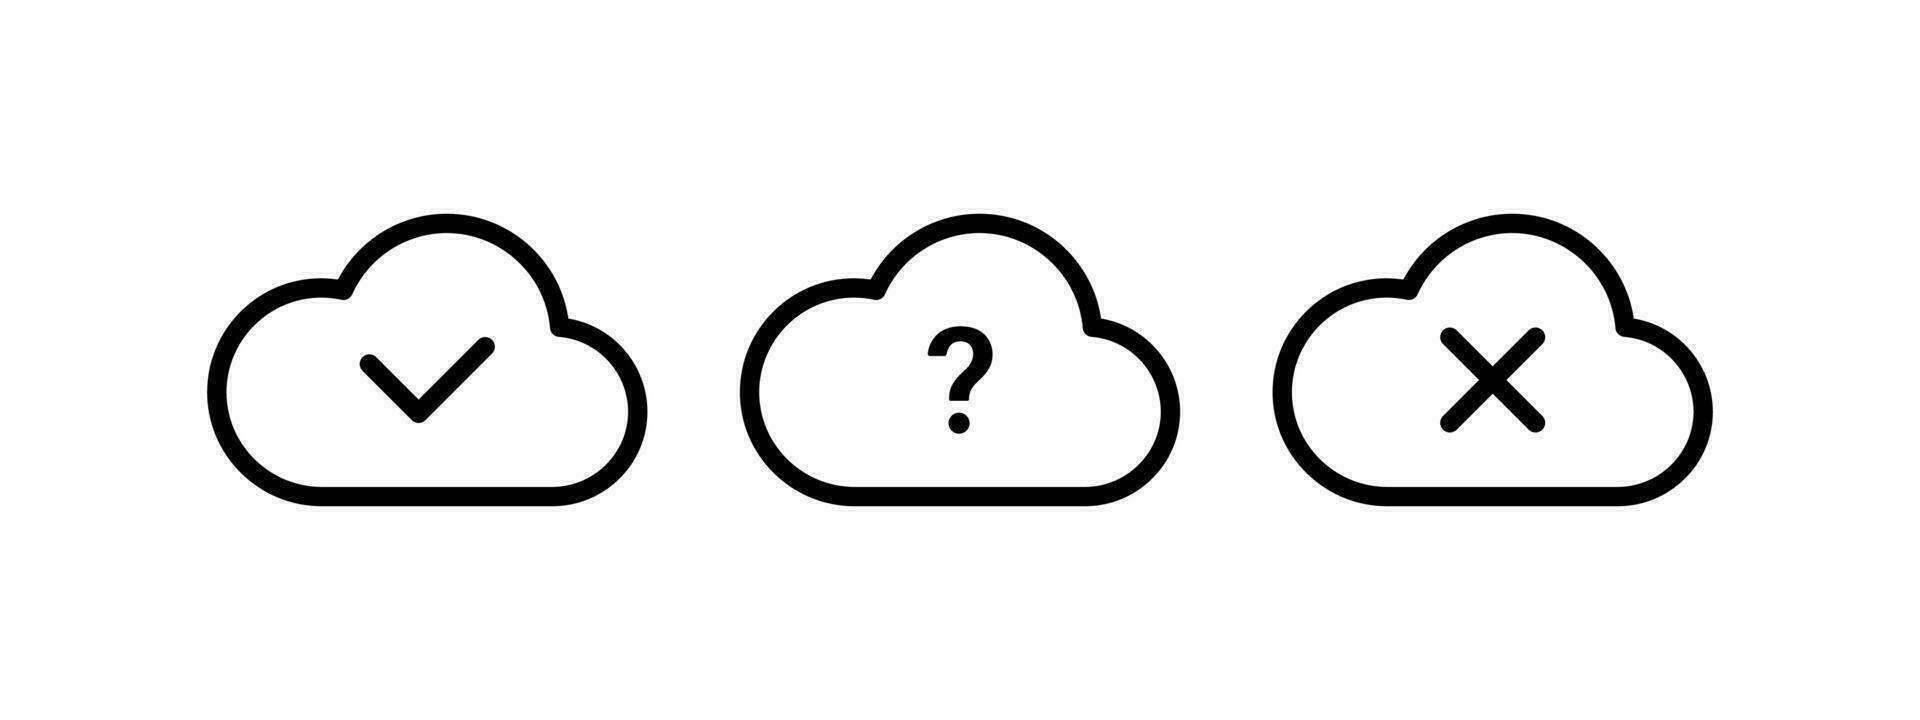 Cloud services. Cloud data storage. Vector icons